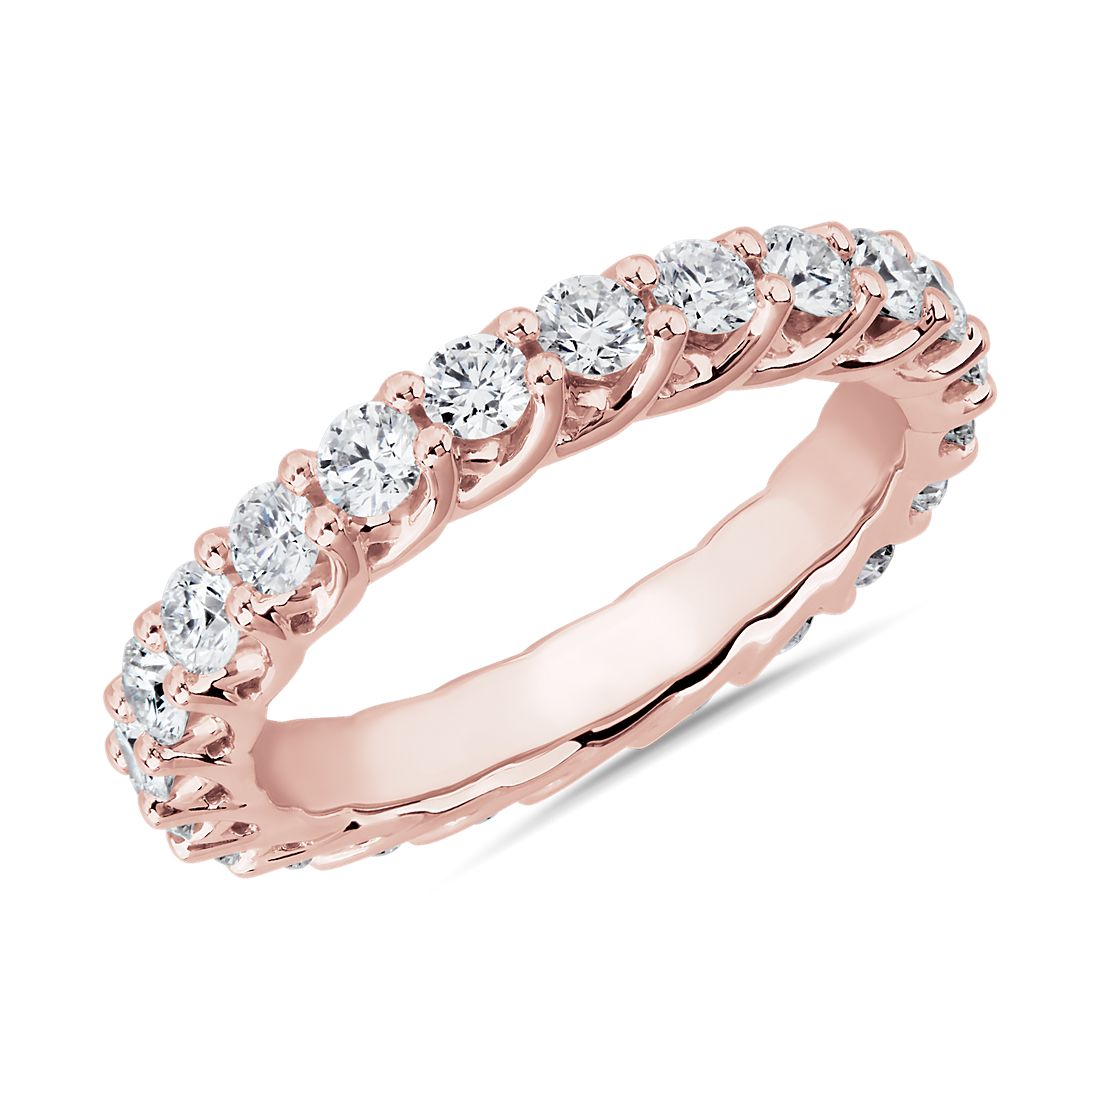 Tessere Diamond Eternity Ring in 14k Rose Gold (1 1/2 ct. tw.)